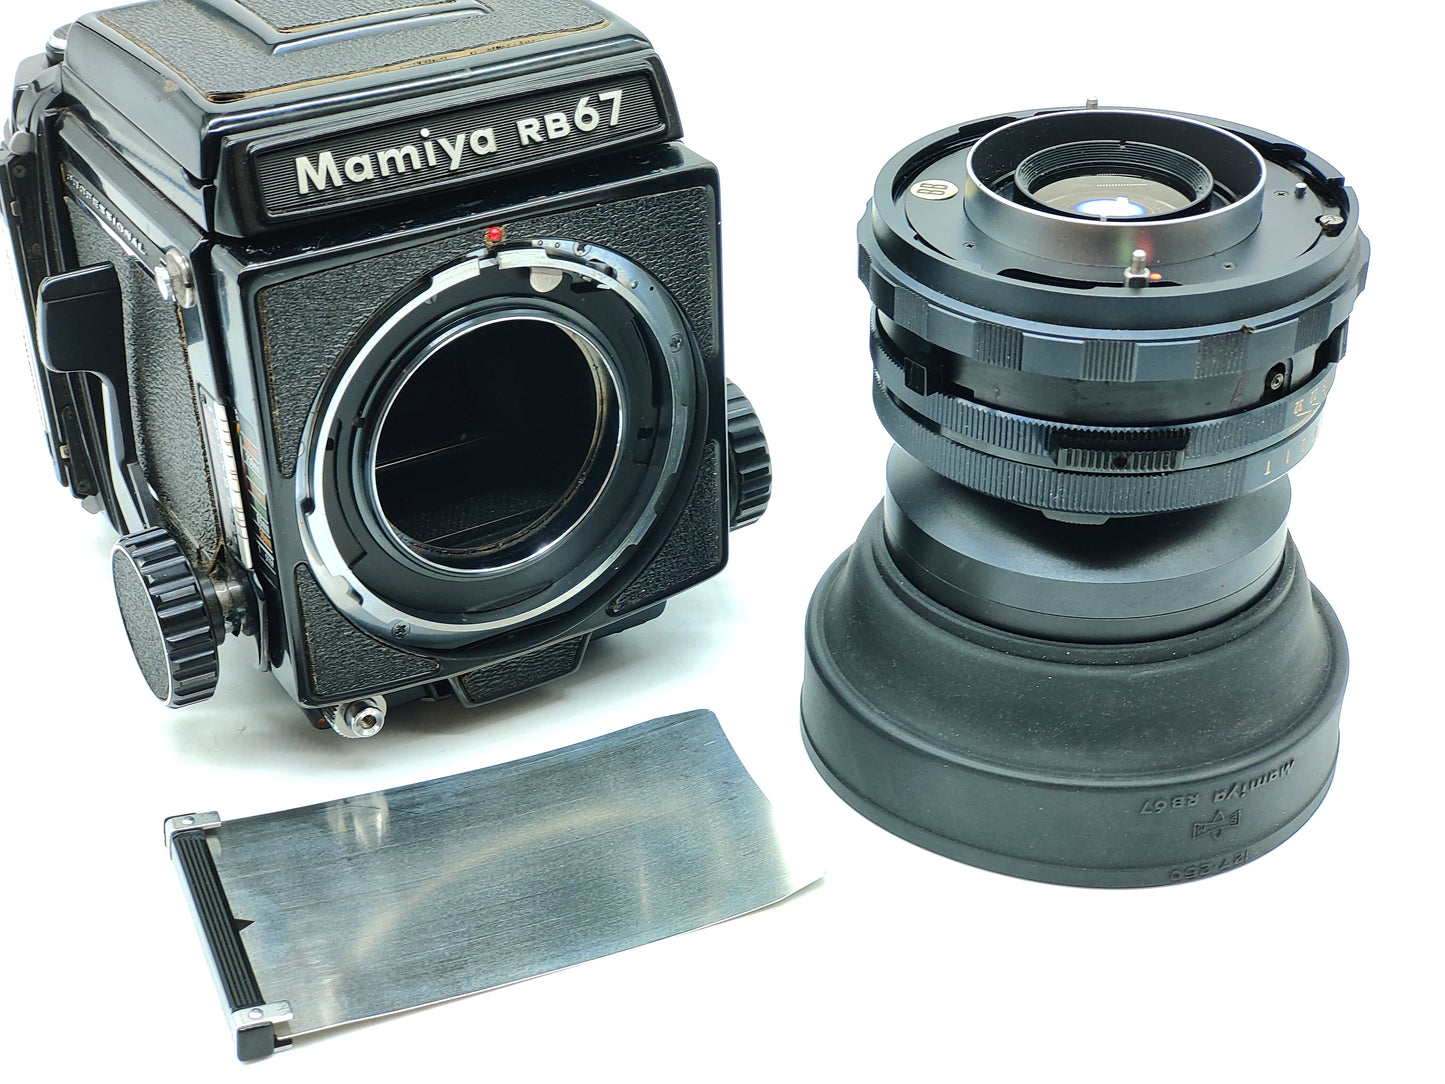 Mamiya RB67 Professional film camera